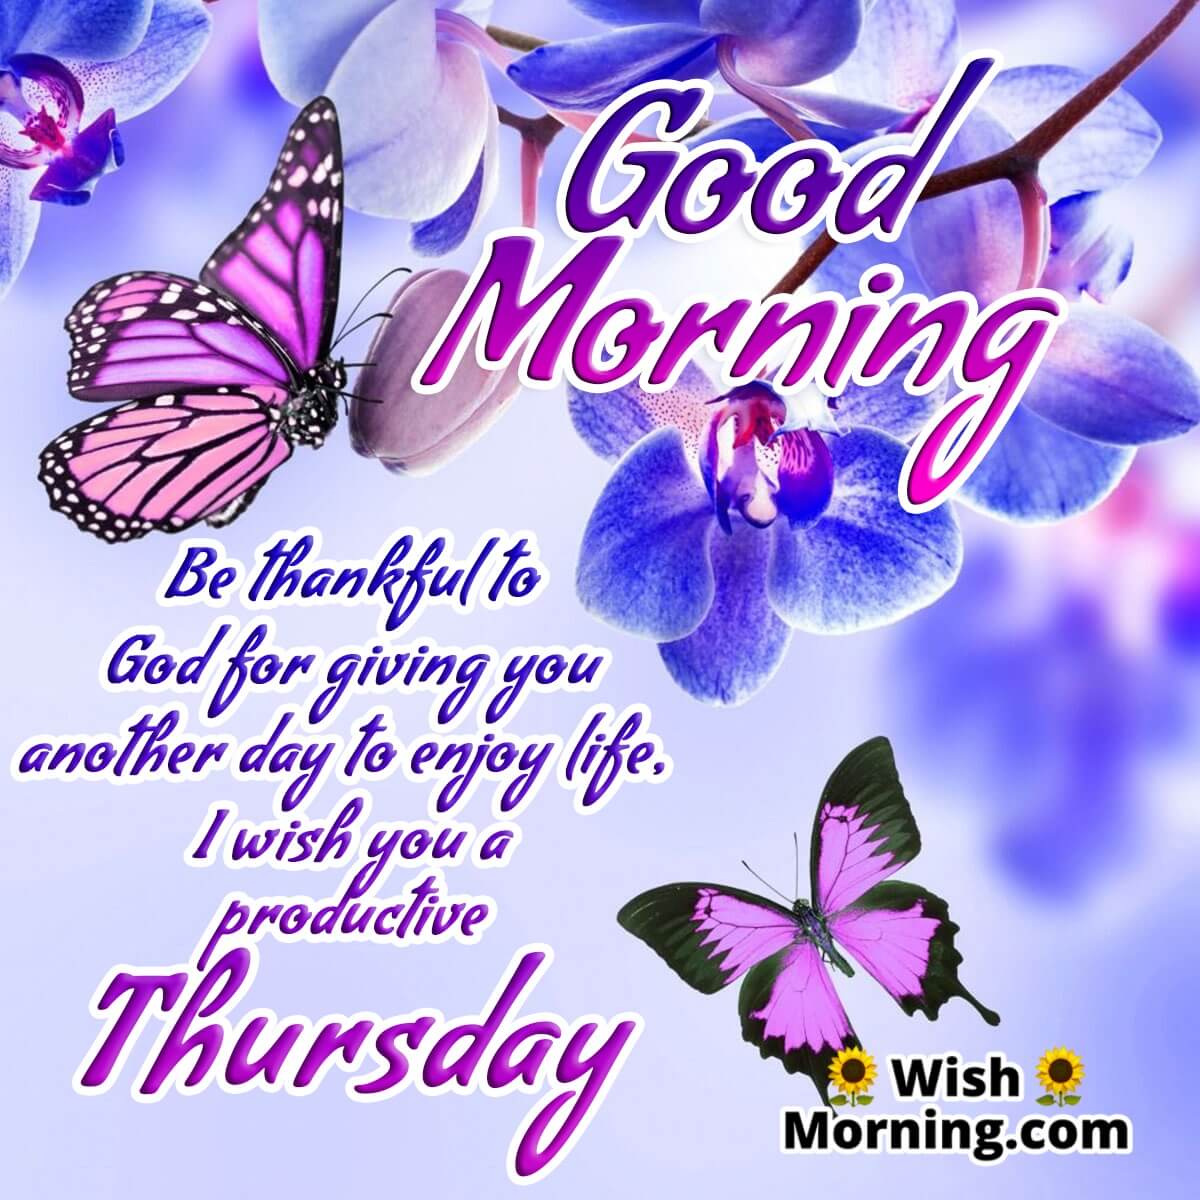 Thursday Morning Wishes - Wish Morning